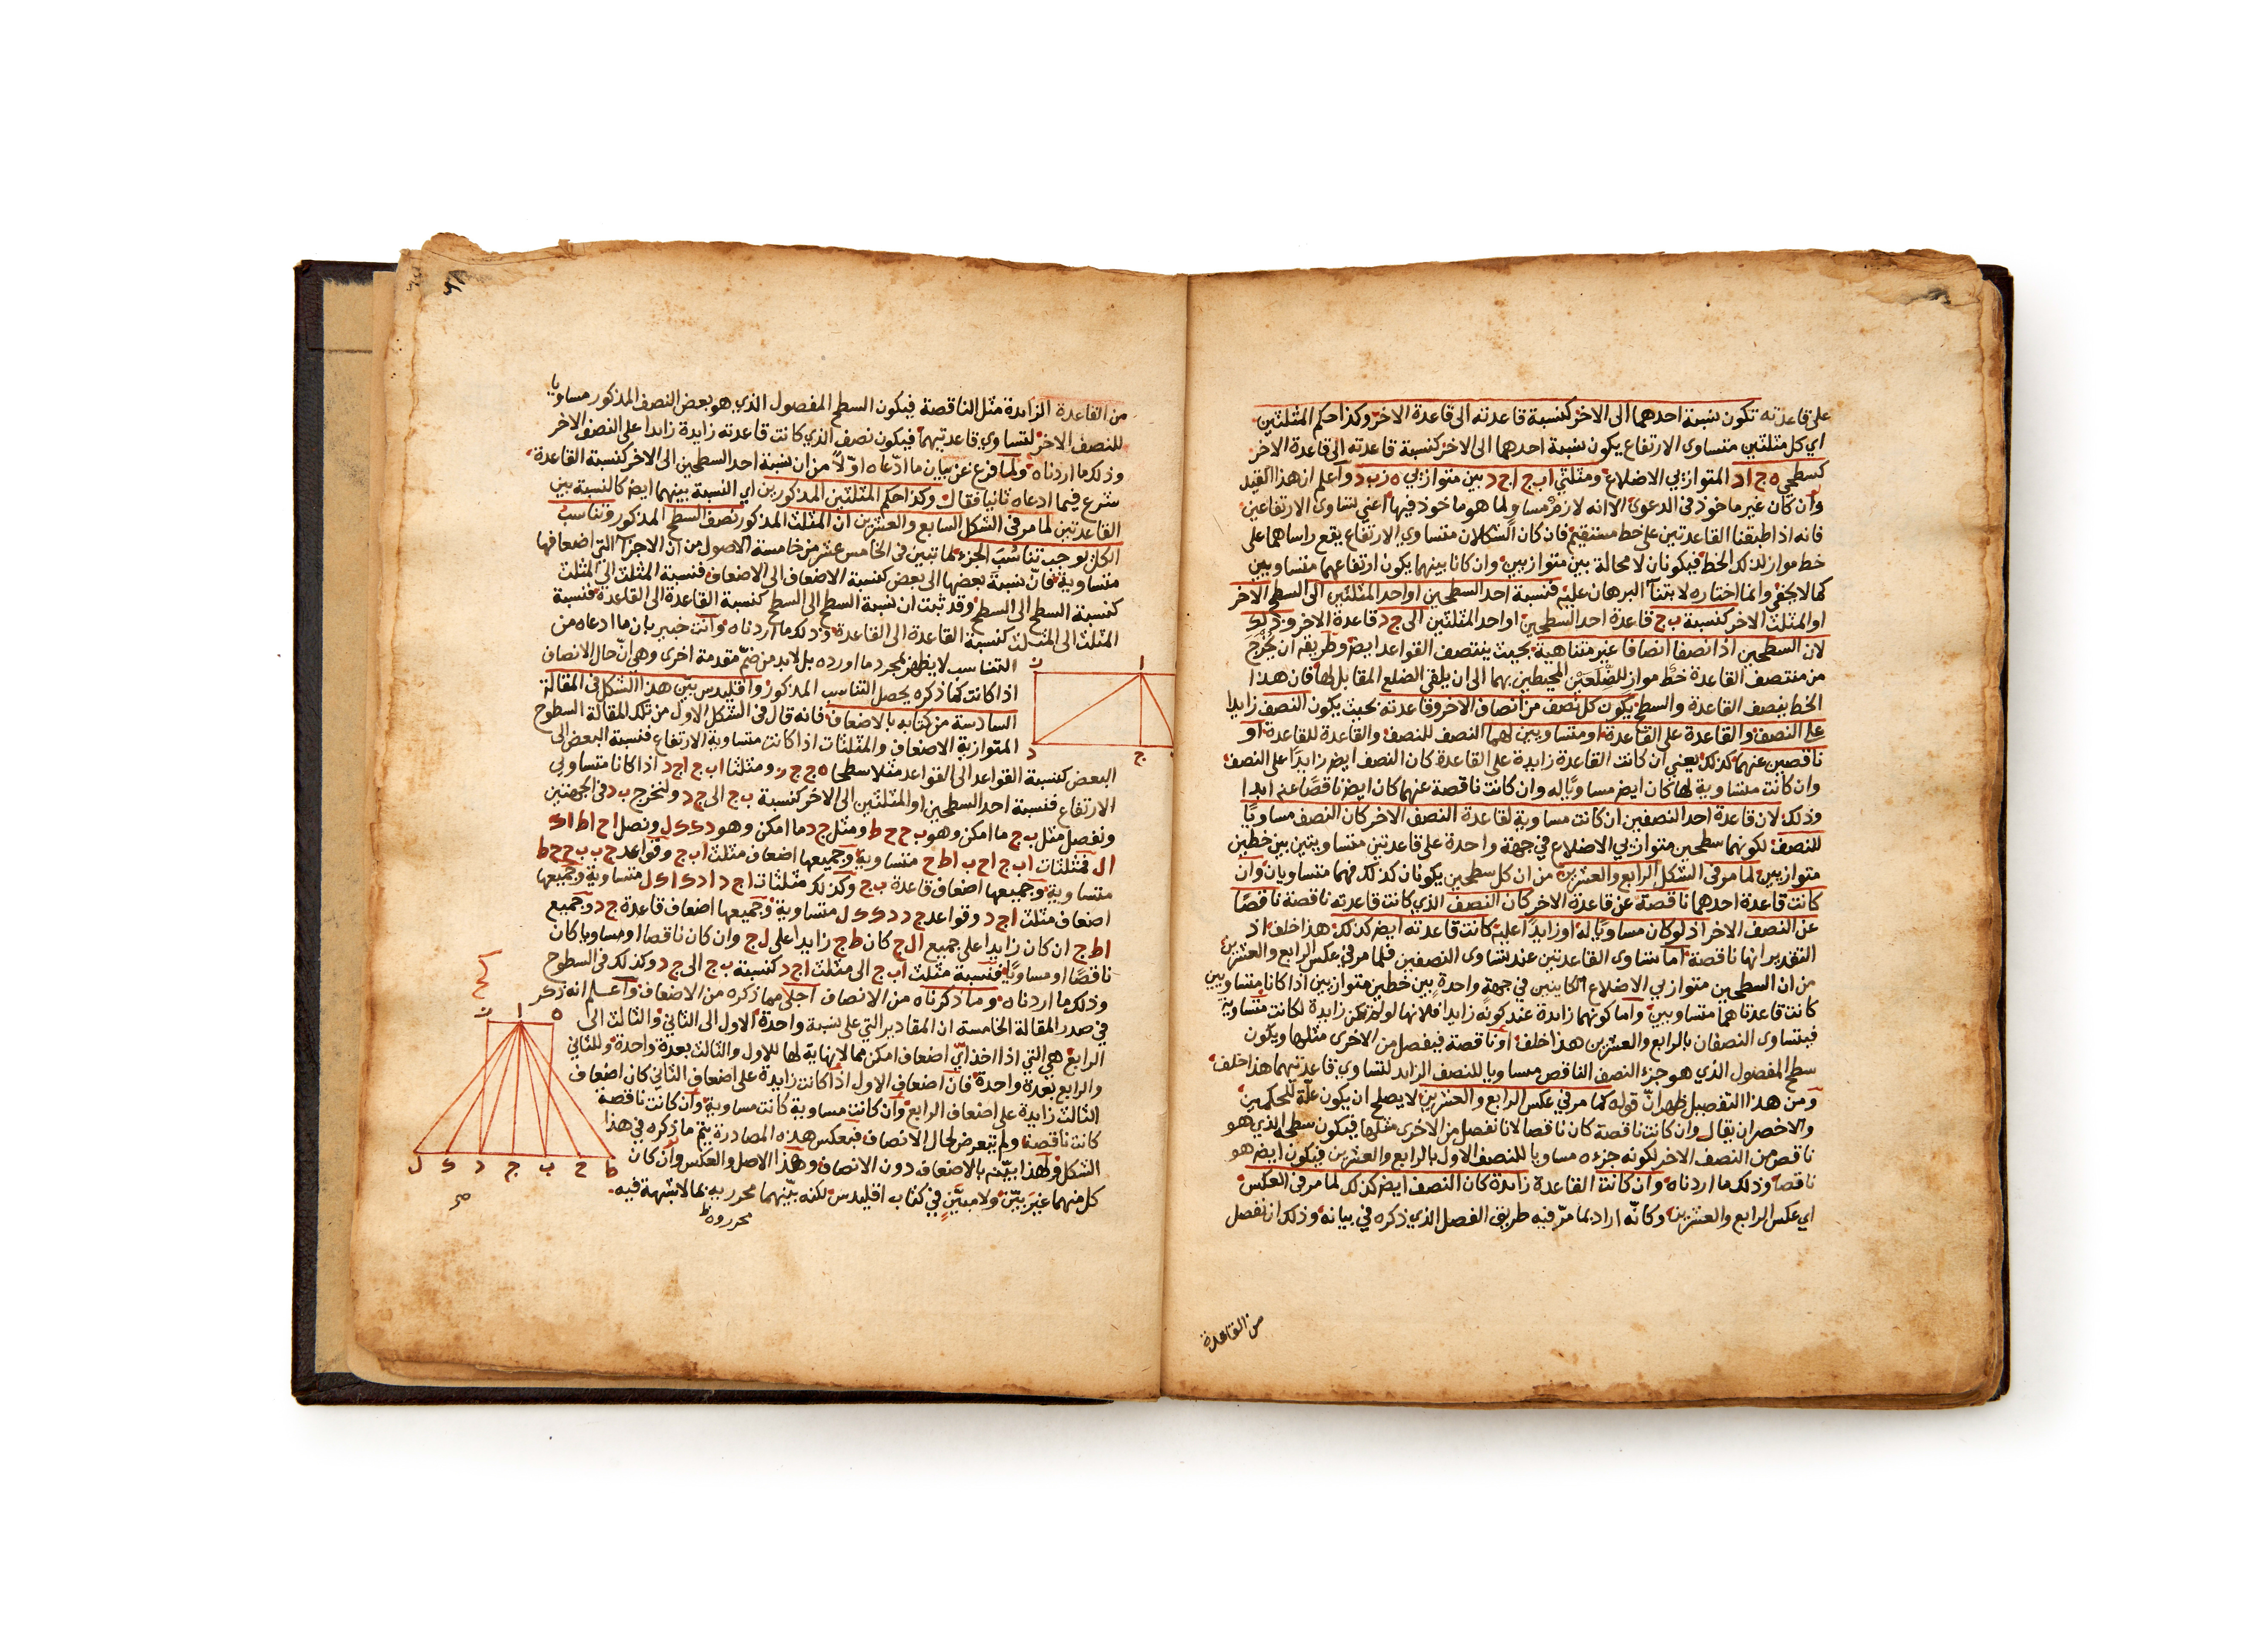 ABDUL MOUTI BIN HASSAN BIN ABDULLAH AL MEKKI, A MANUSCRIPT ABOUT GEOMETRY & MATHS, DATED 983AH - Image 7 of 16